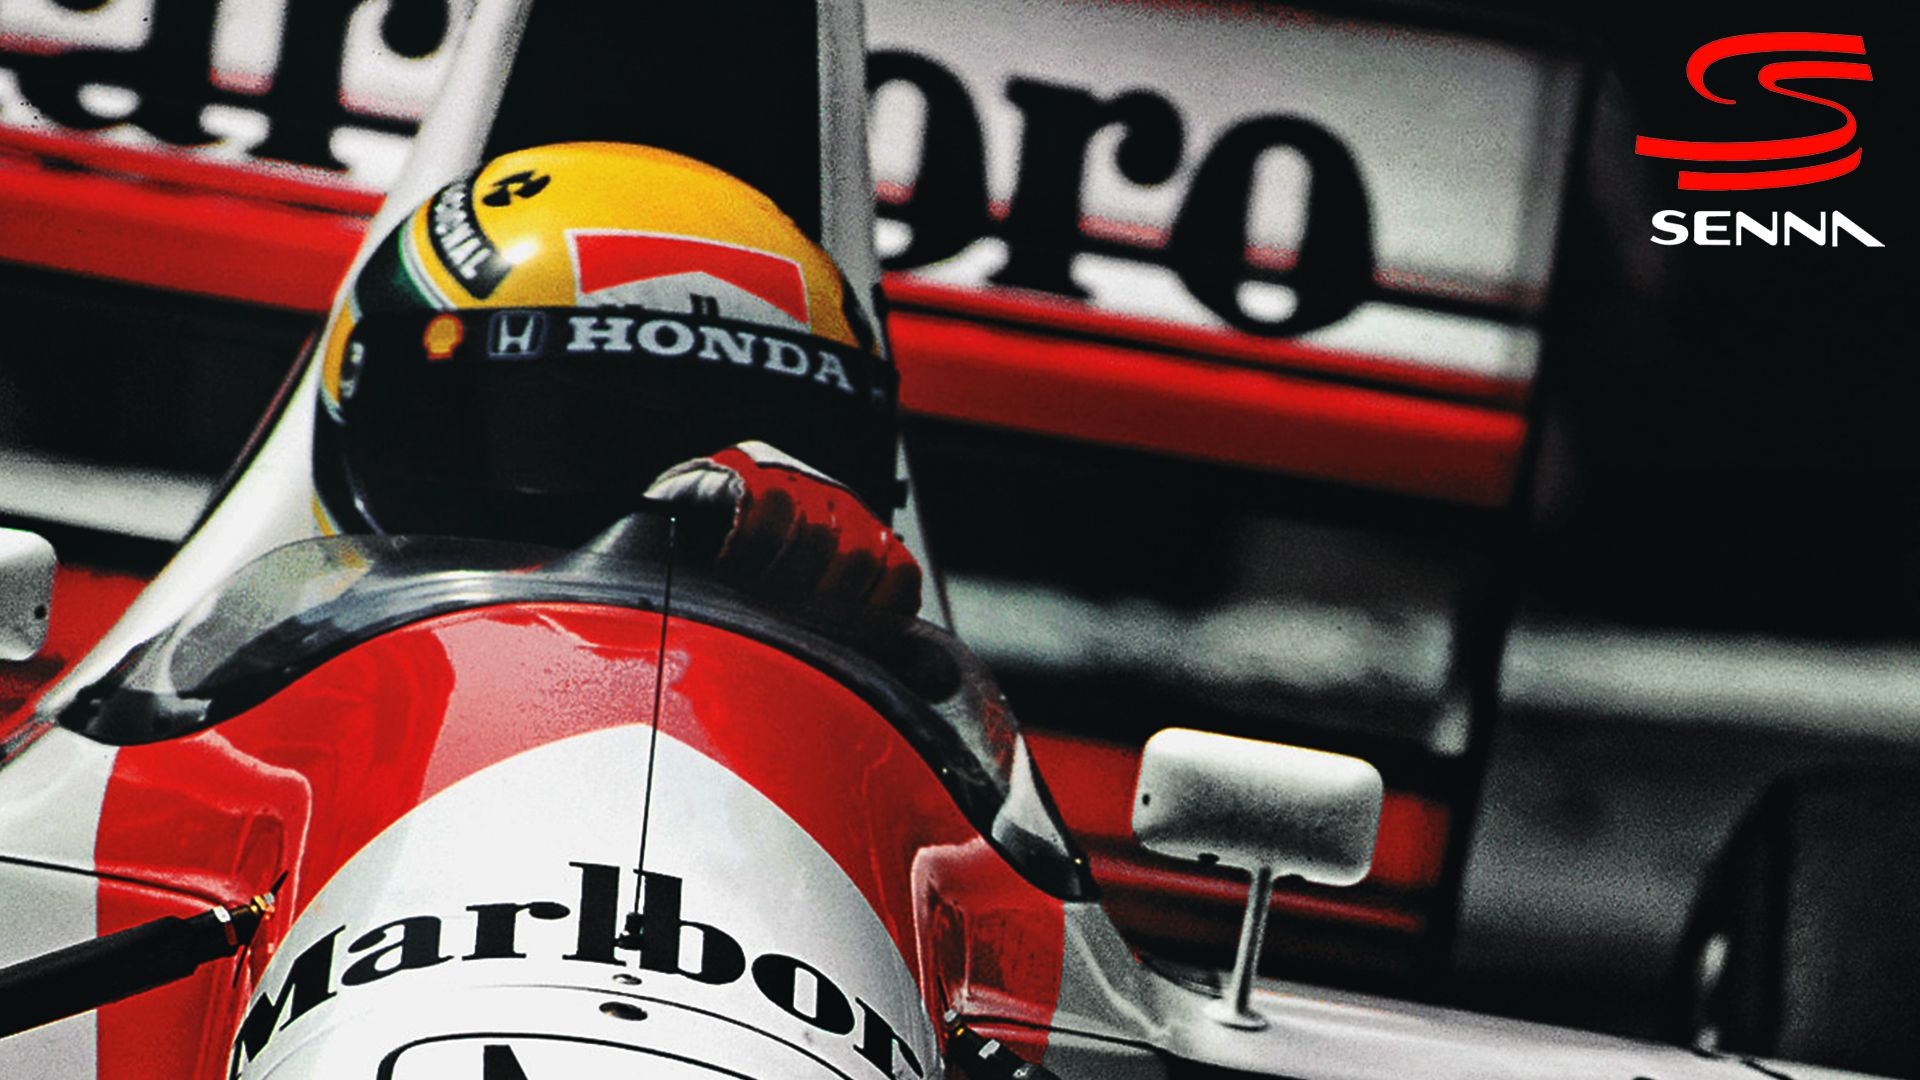 Fonds d'écran Senna : tous les wallpapers Senna